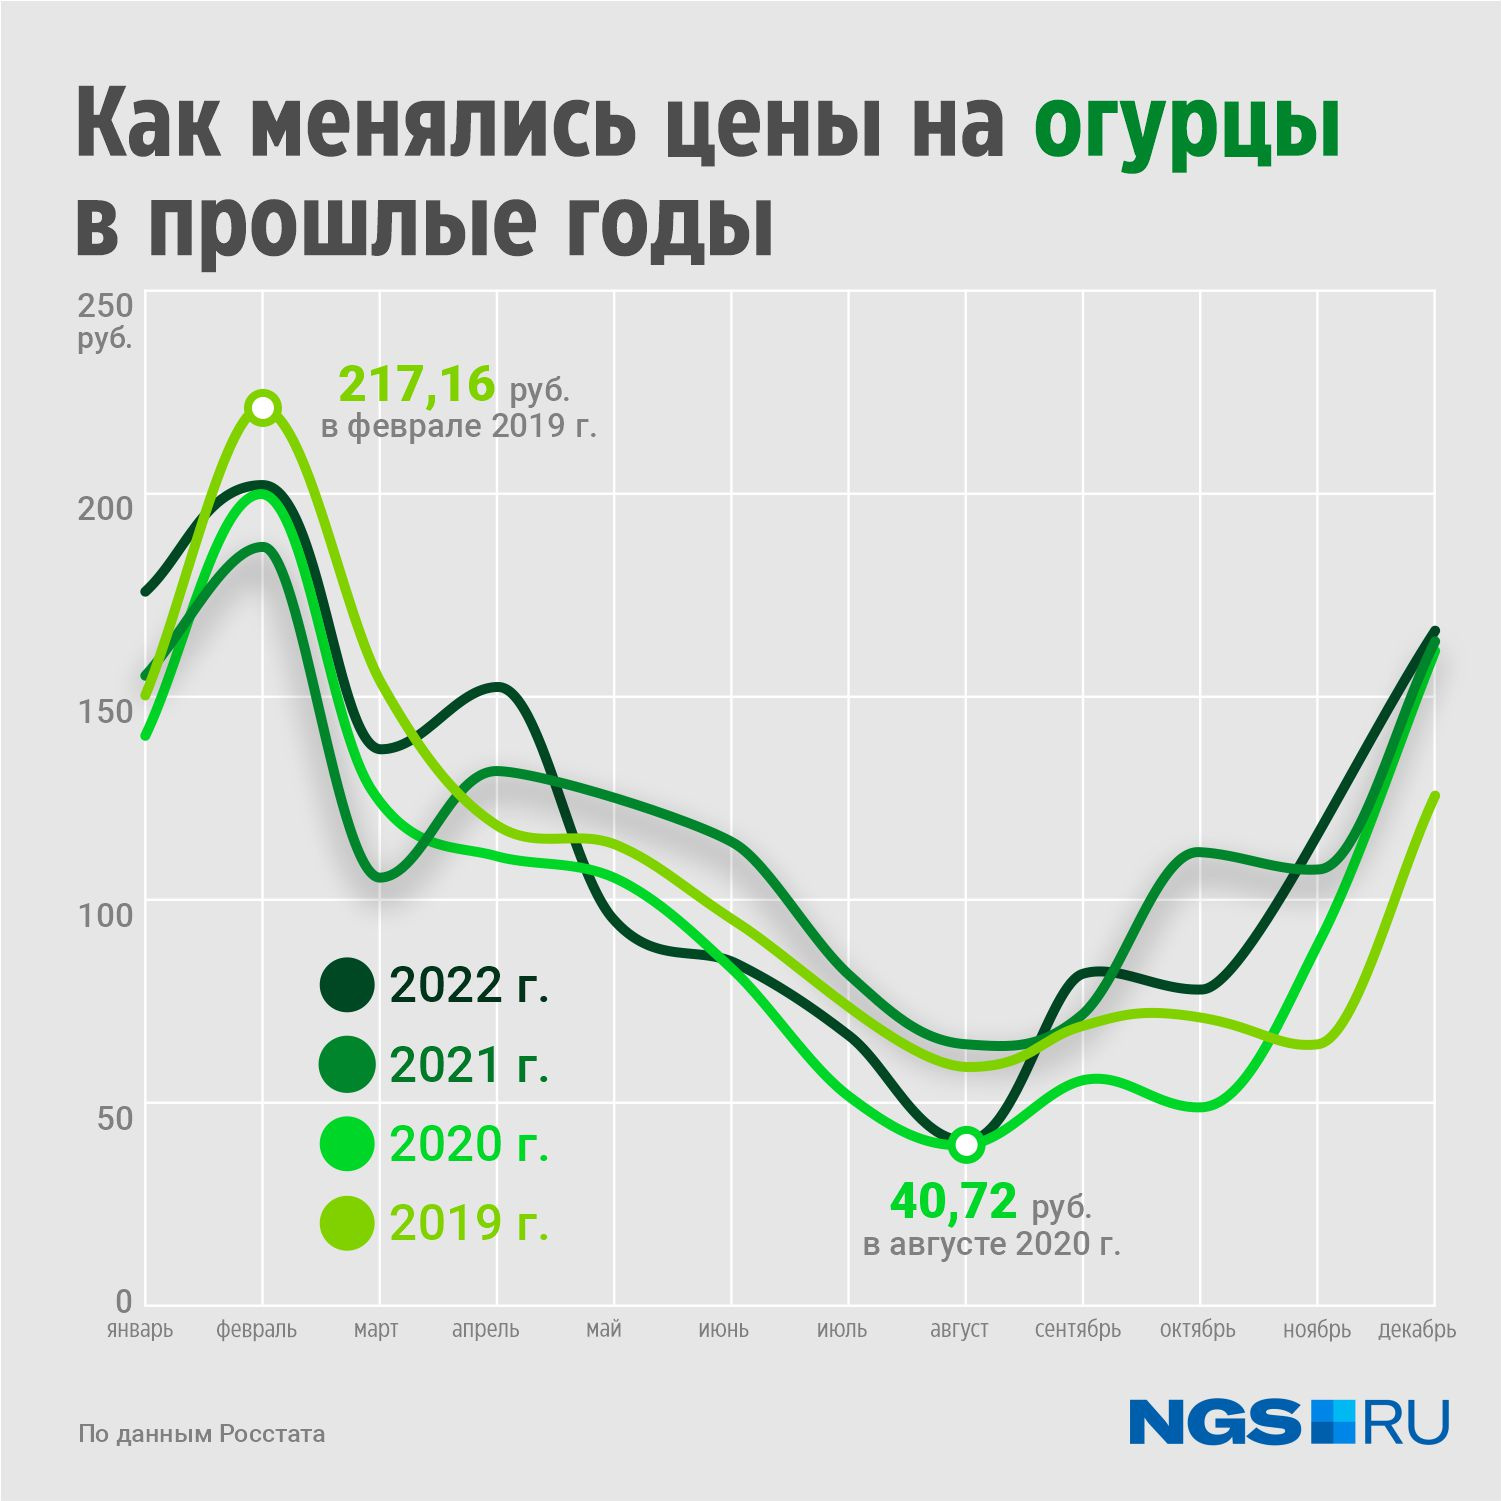 Как менялась цена на огурцы в течение года с 2019 по 2022 год